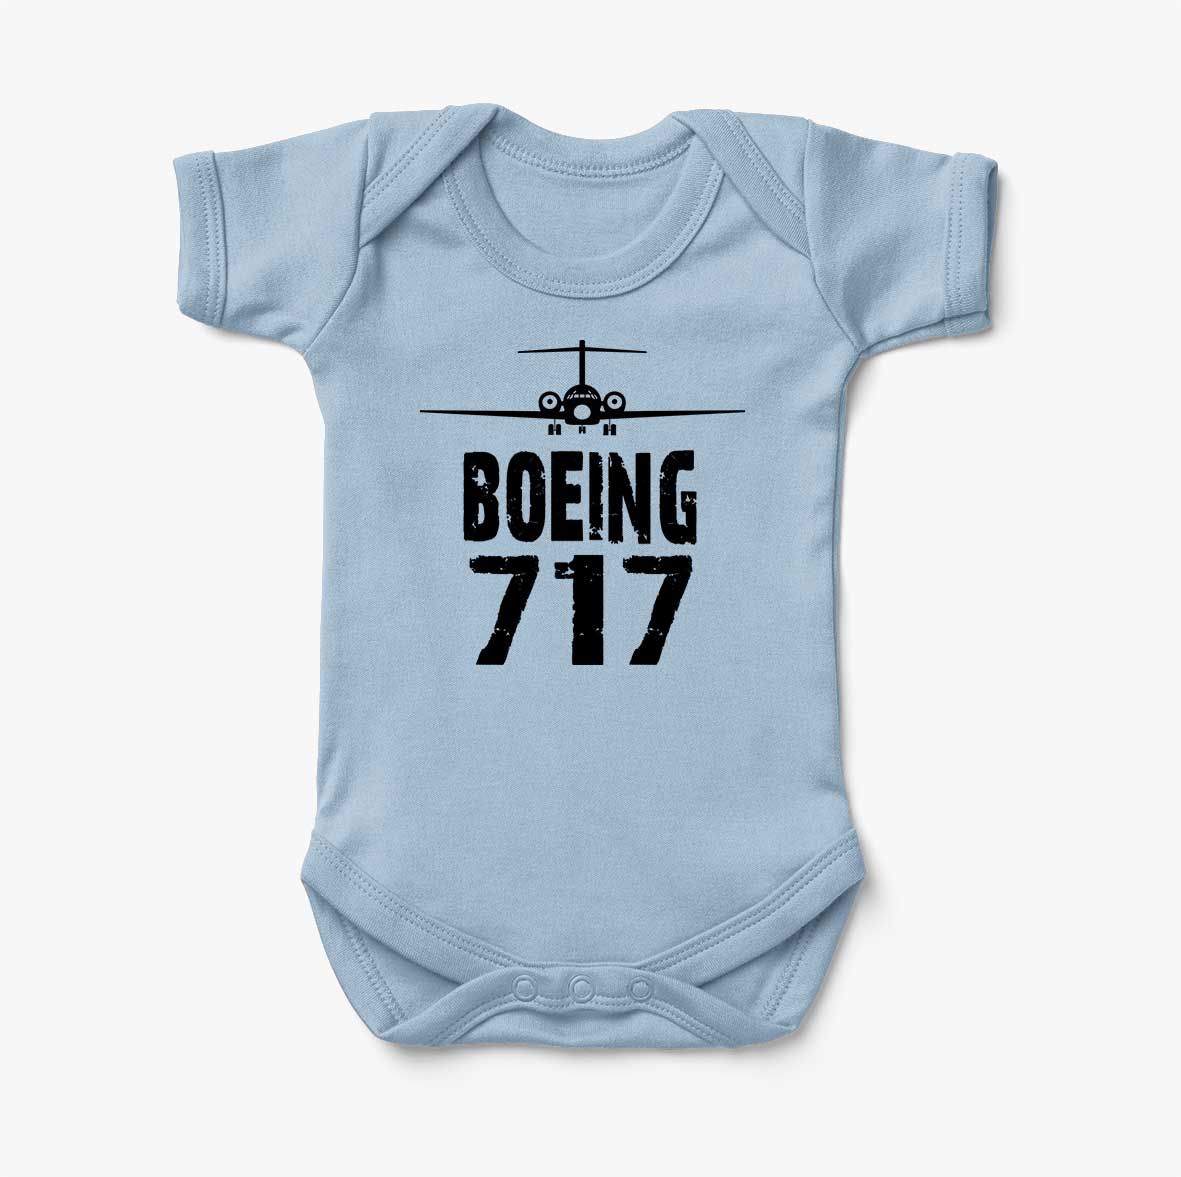 Boeing 717 & Plane Designed Baby Bodysuits